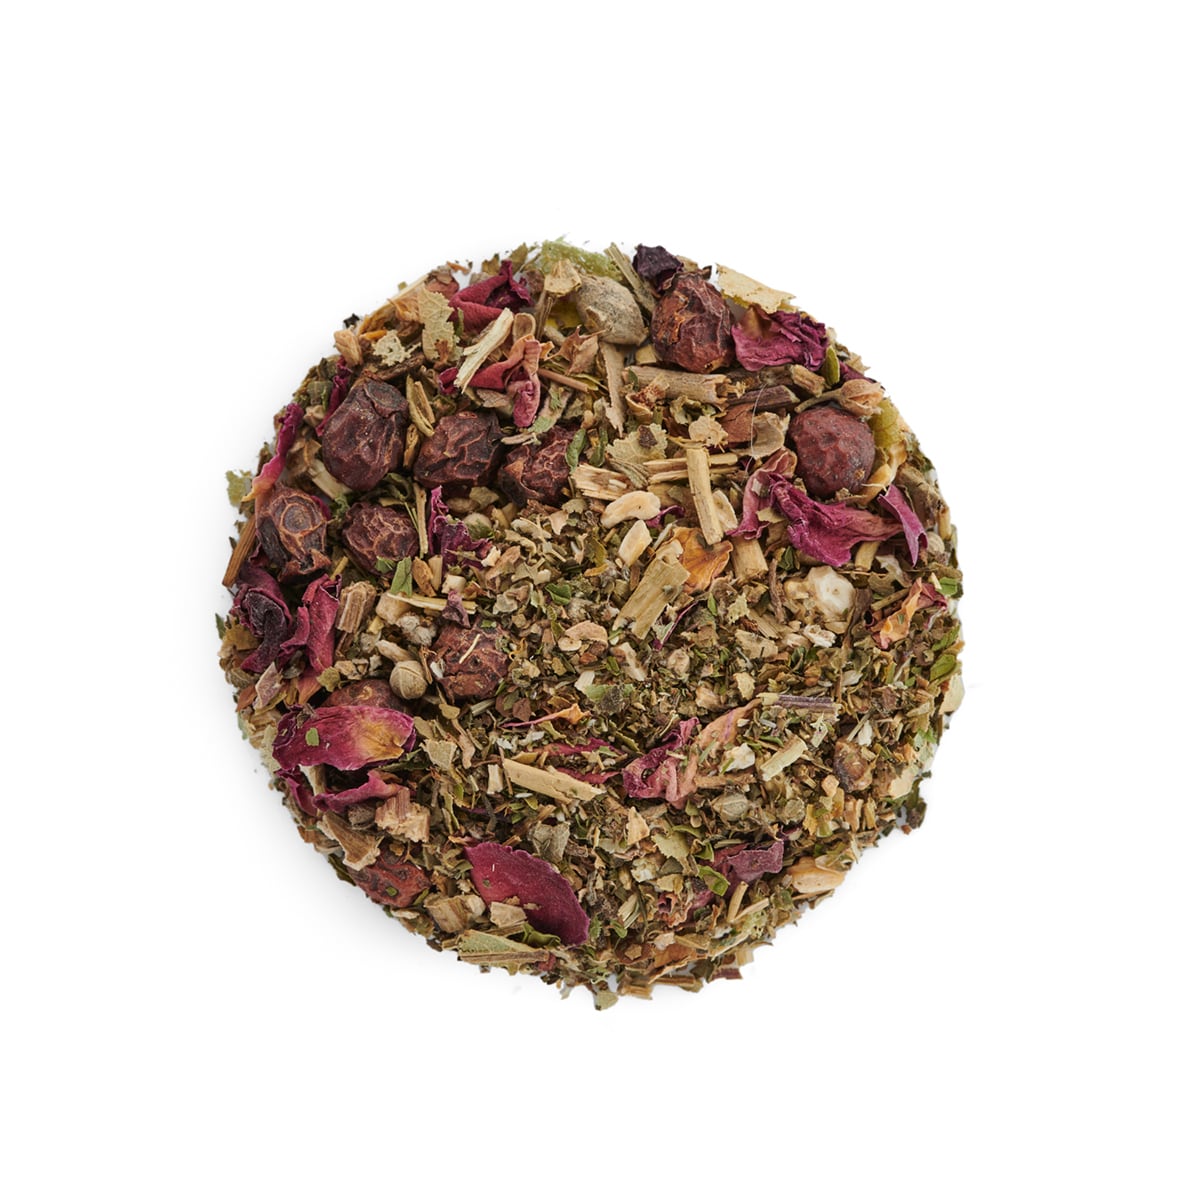 Meno-balance Tea | For Menopause Support